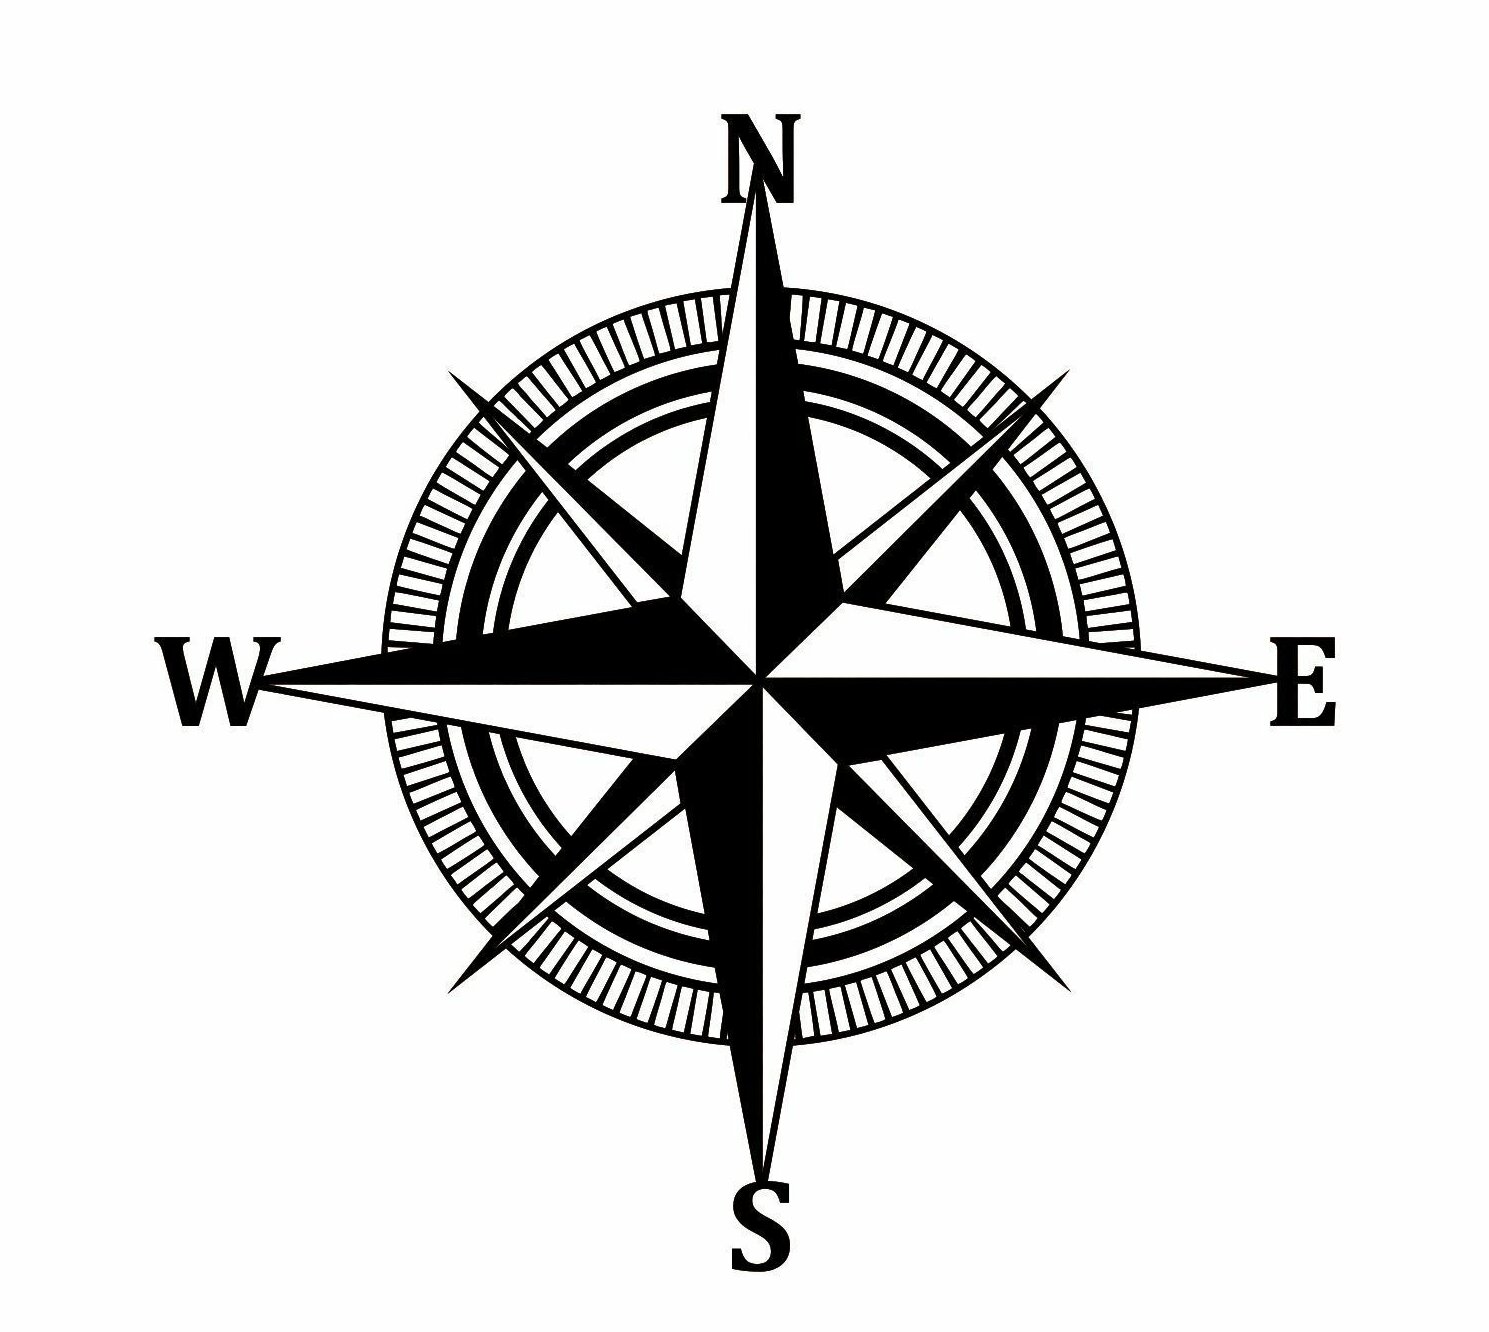 Compass sign